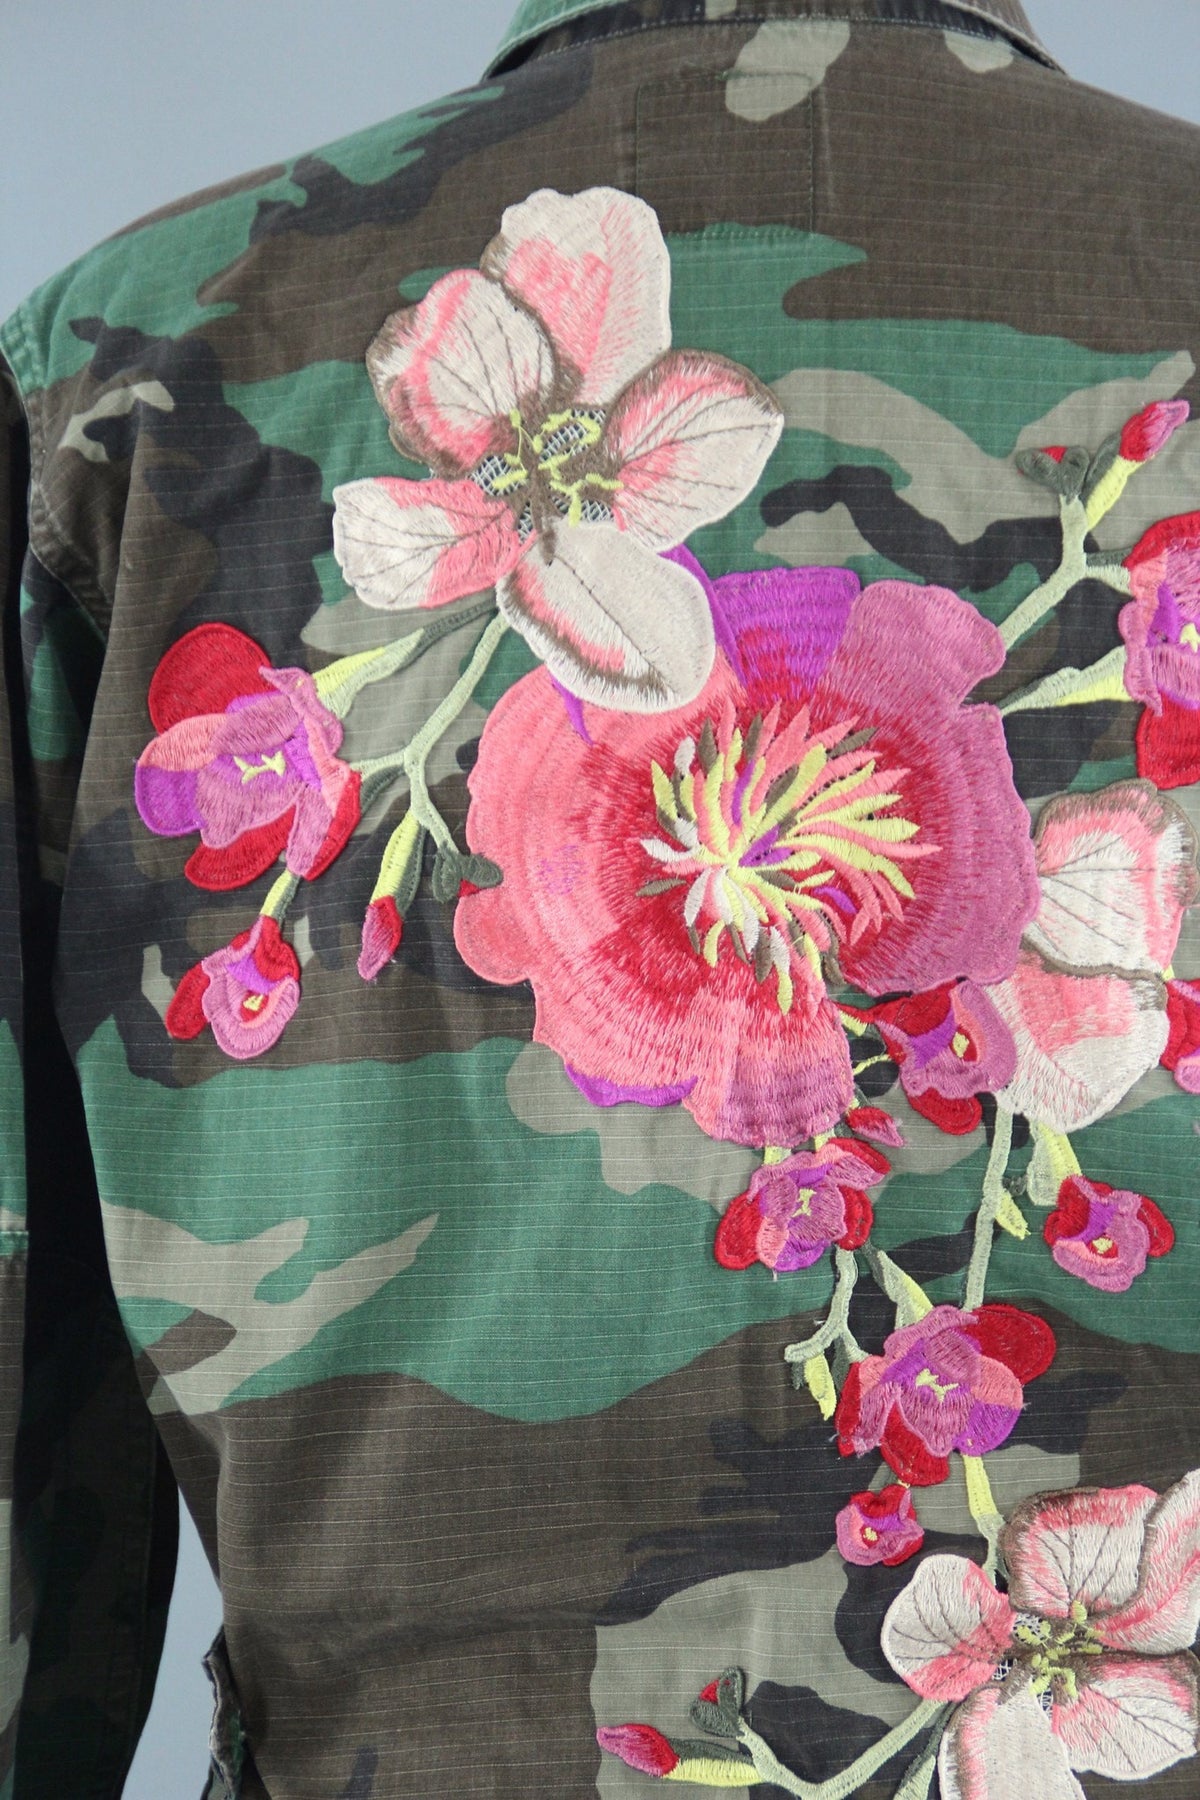 Floral Camo Print Trucker Jacket